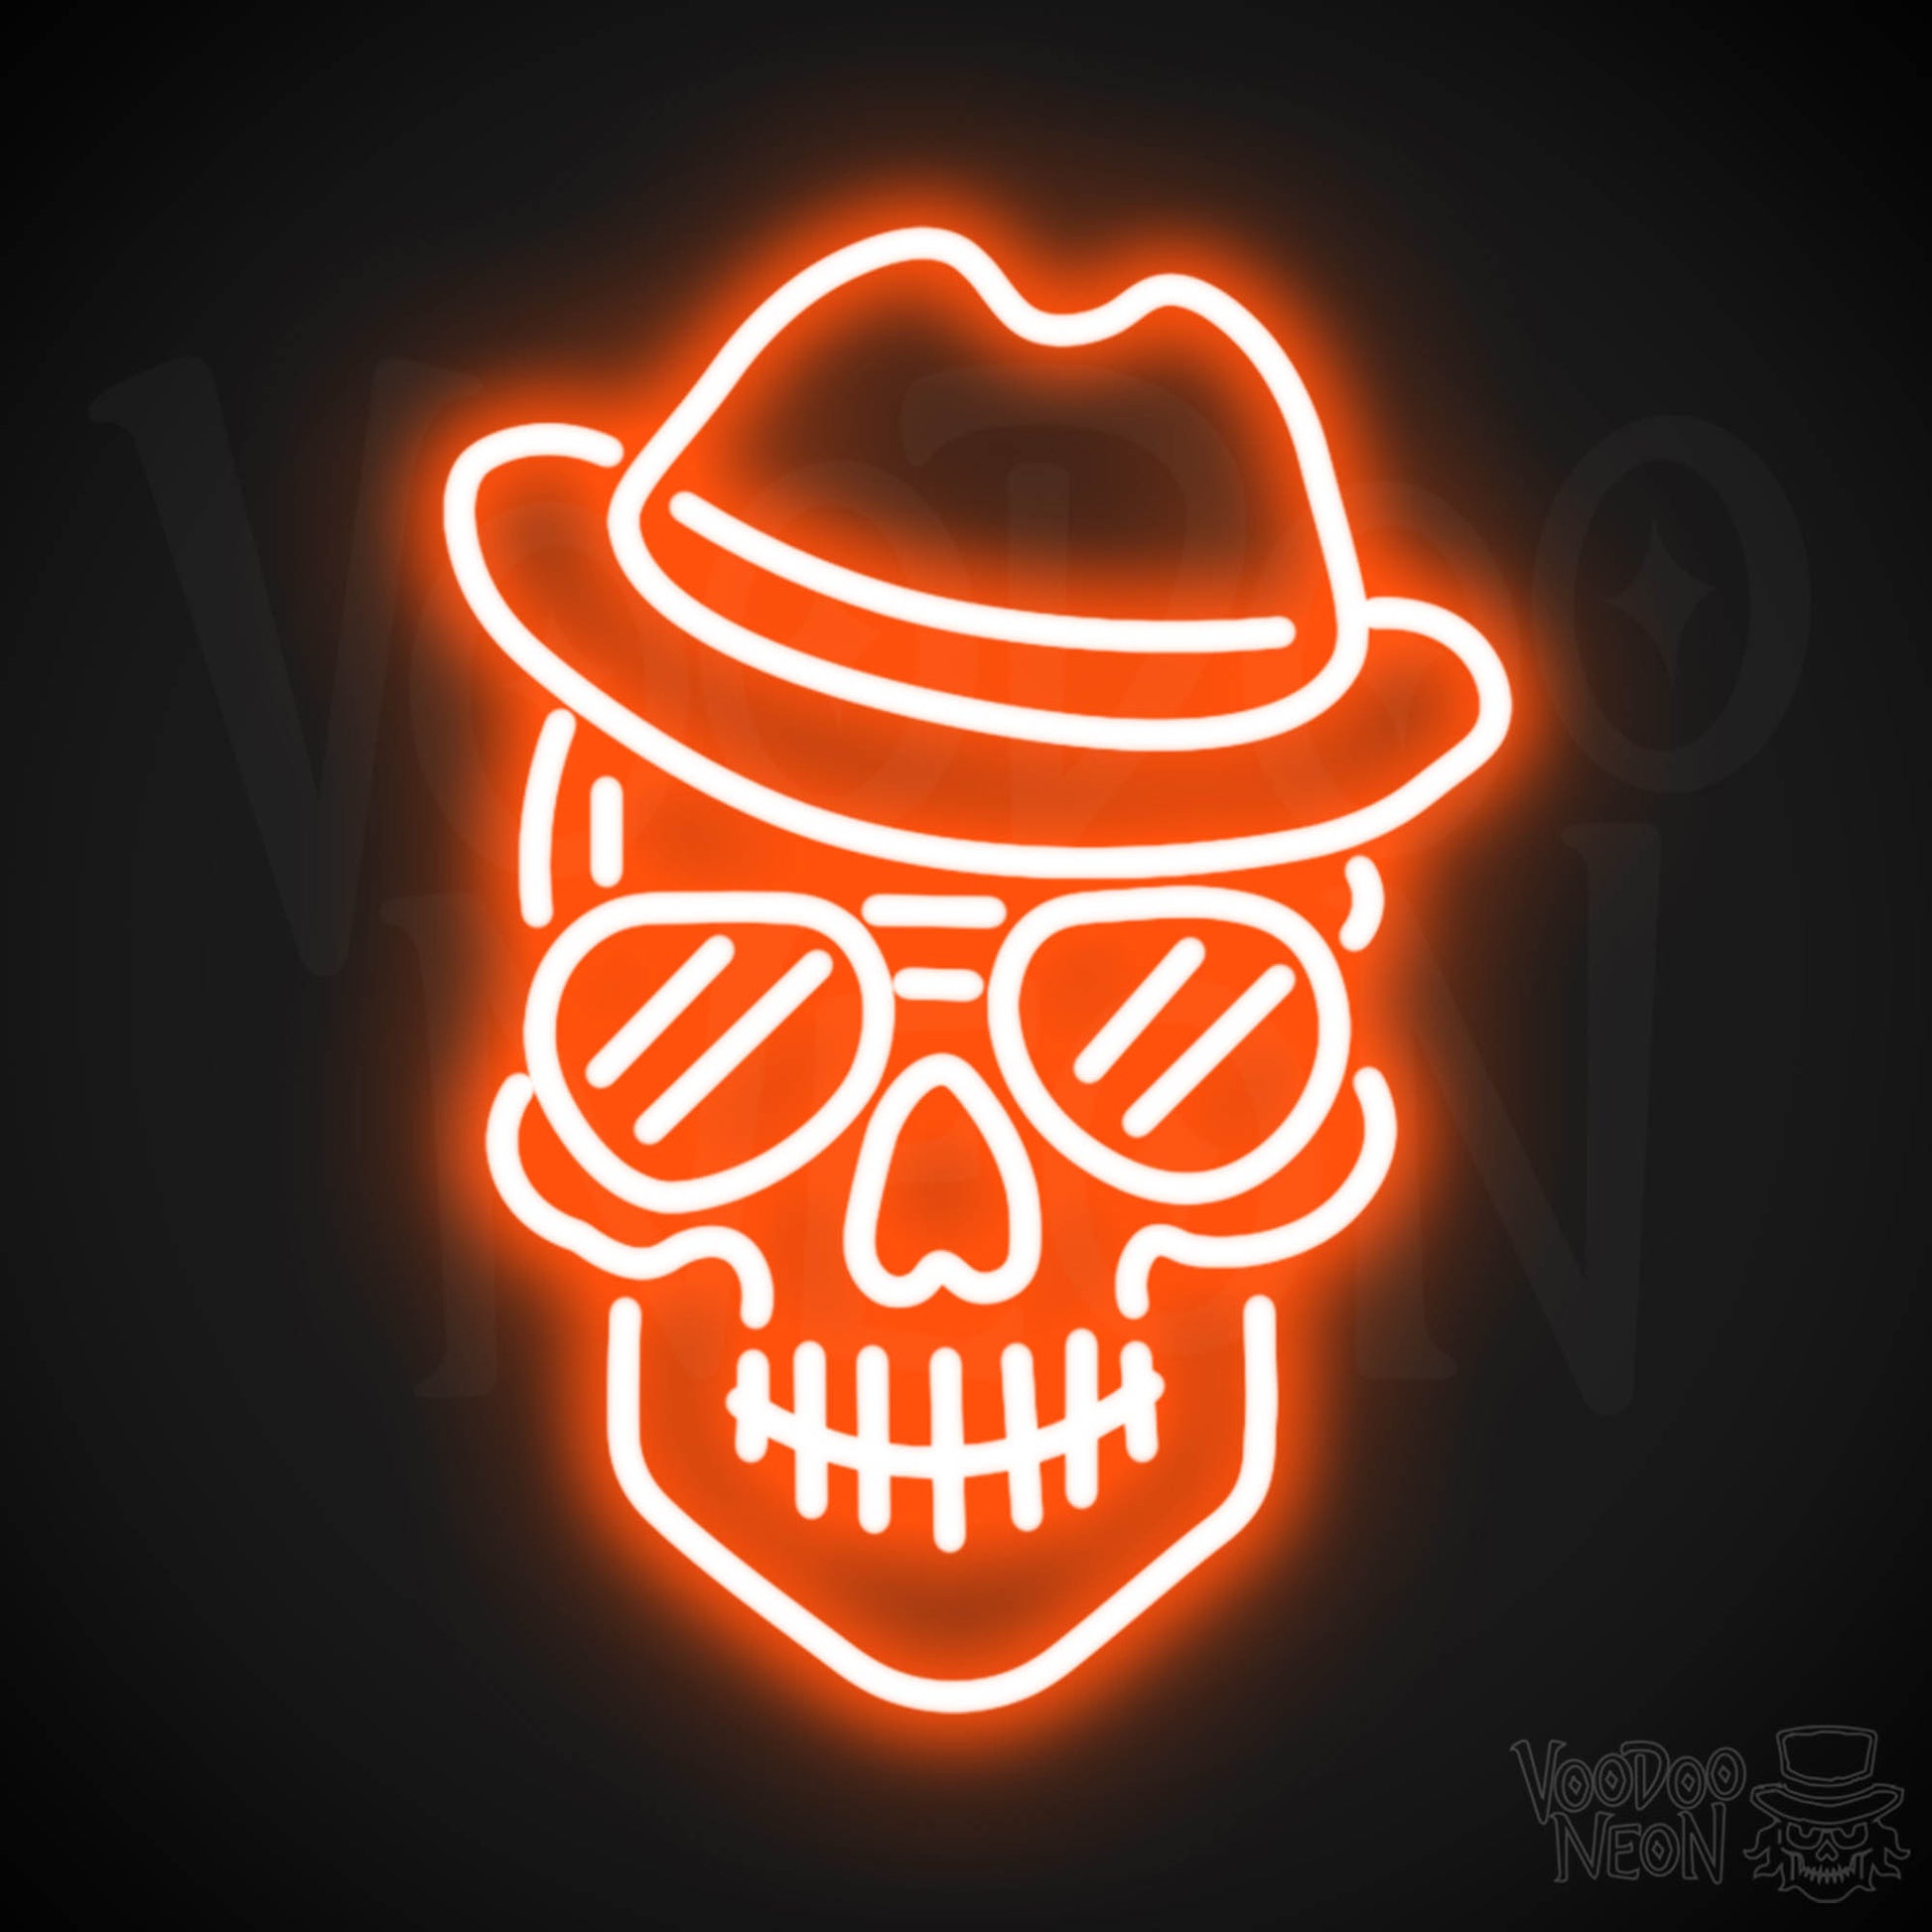 Skull Face Neon Sign - Neon Skull Face Sign - Neon Skull Light - Wall Art - Color Orange